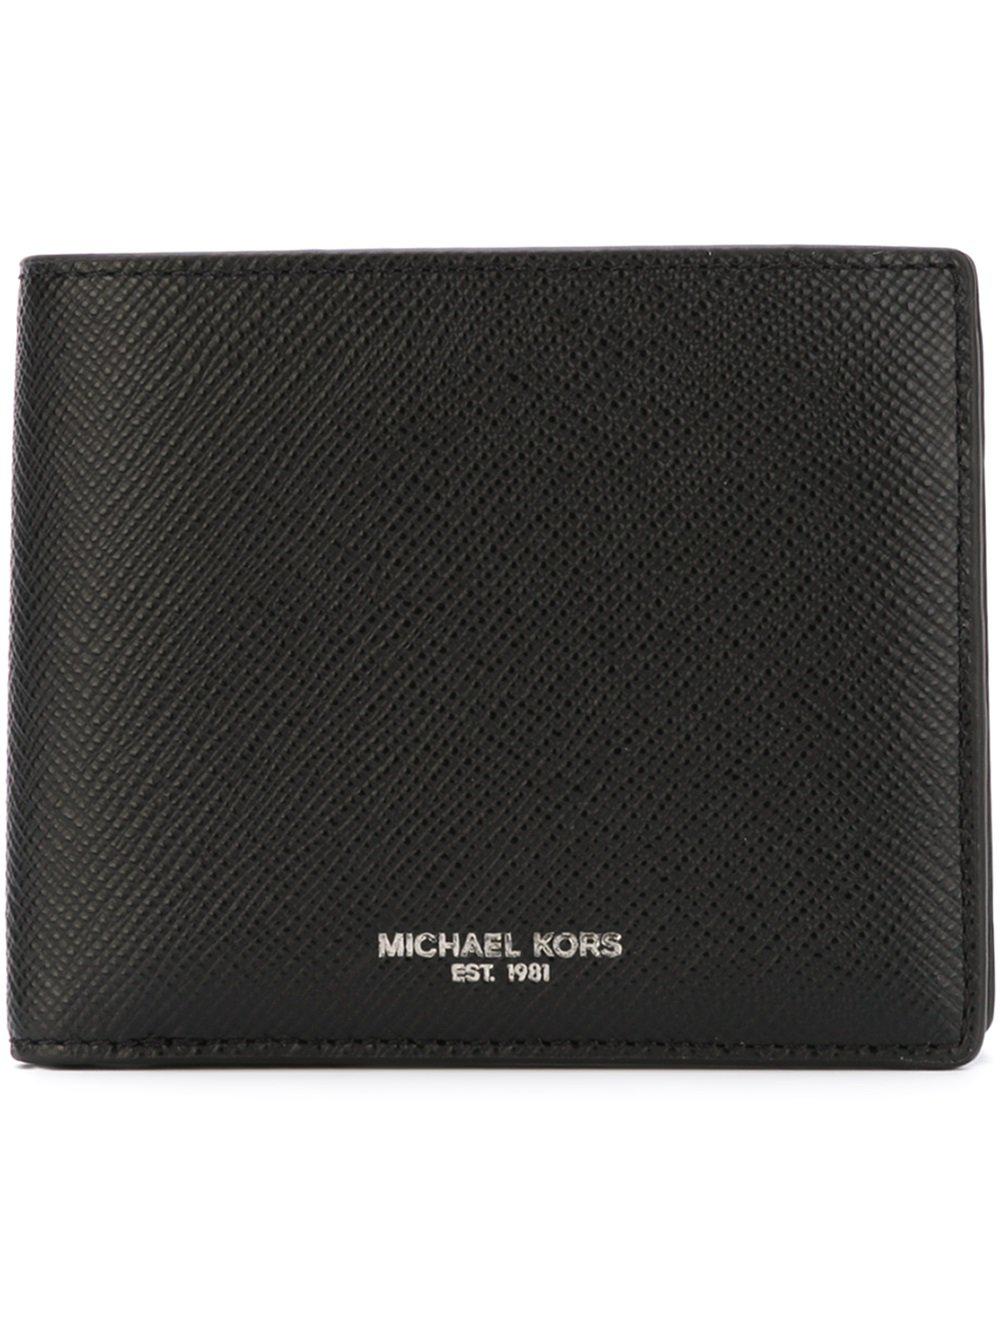 Michael Kors Leather 'harrison' Fold Over Wallet in Black for Men ...